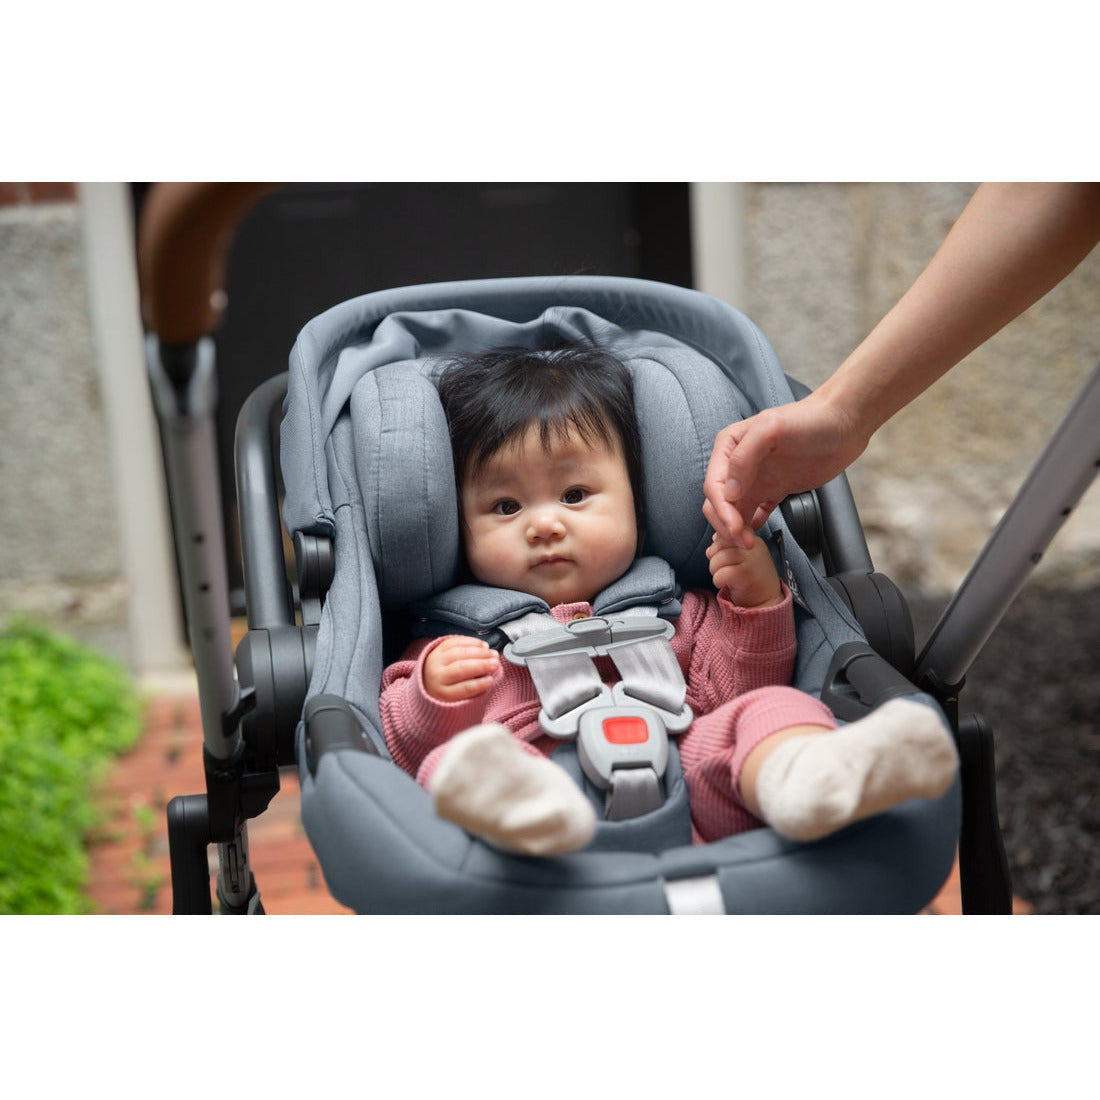 UPPAbaby Mesa Max Infant Car Seat - Gregory (Merino Wool)